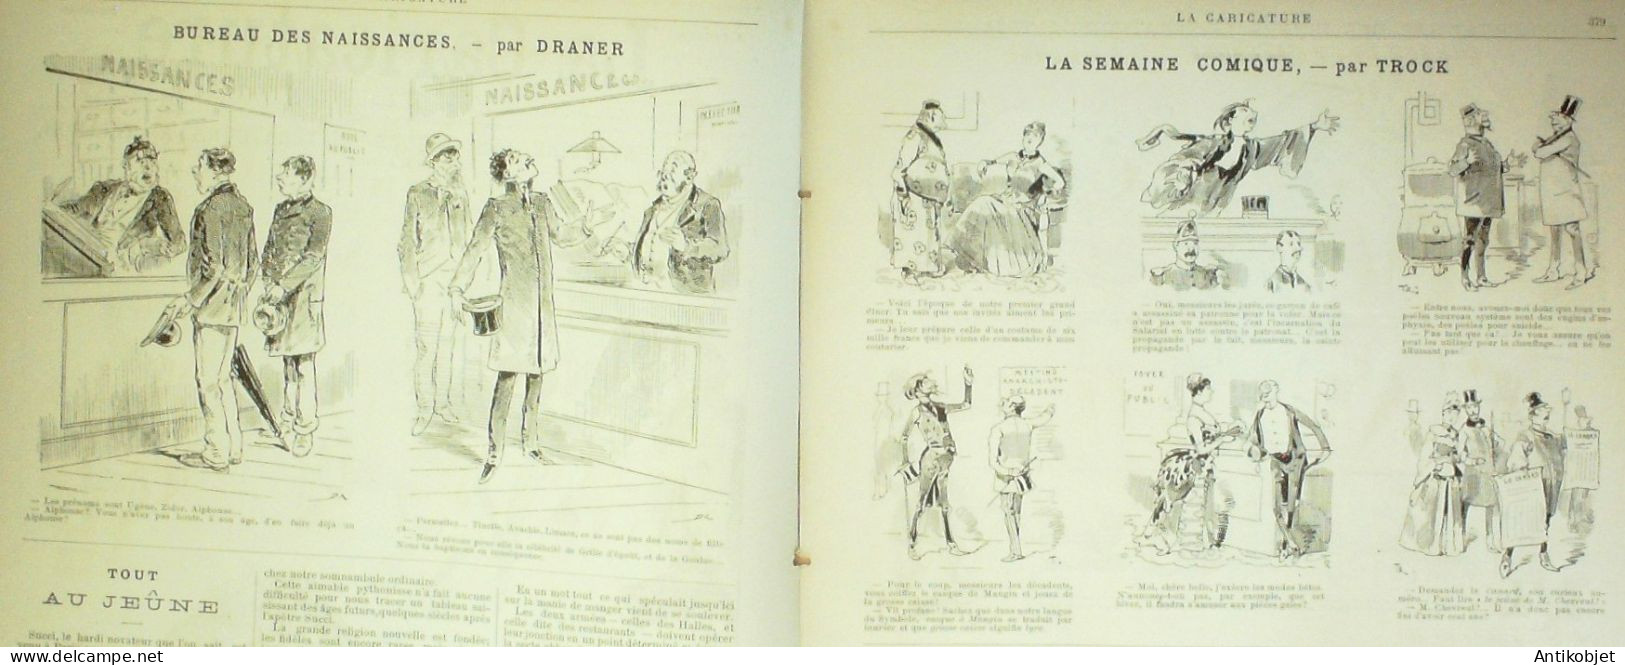 La Caricature 1886 N°360 Littérateurs à Trianon Robida Job L'esprit Fox - Revues Anciennes - Avant 1900